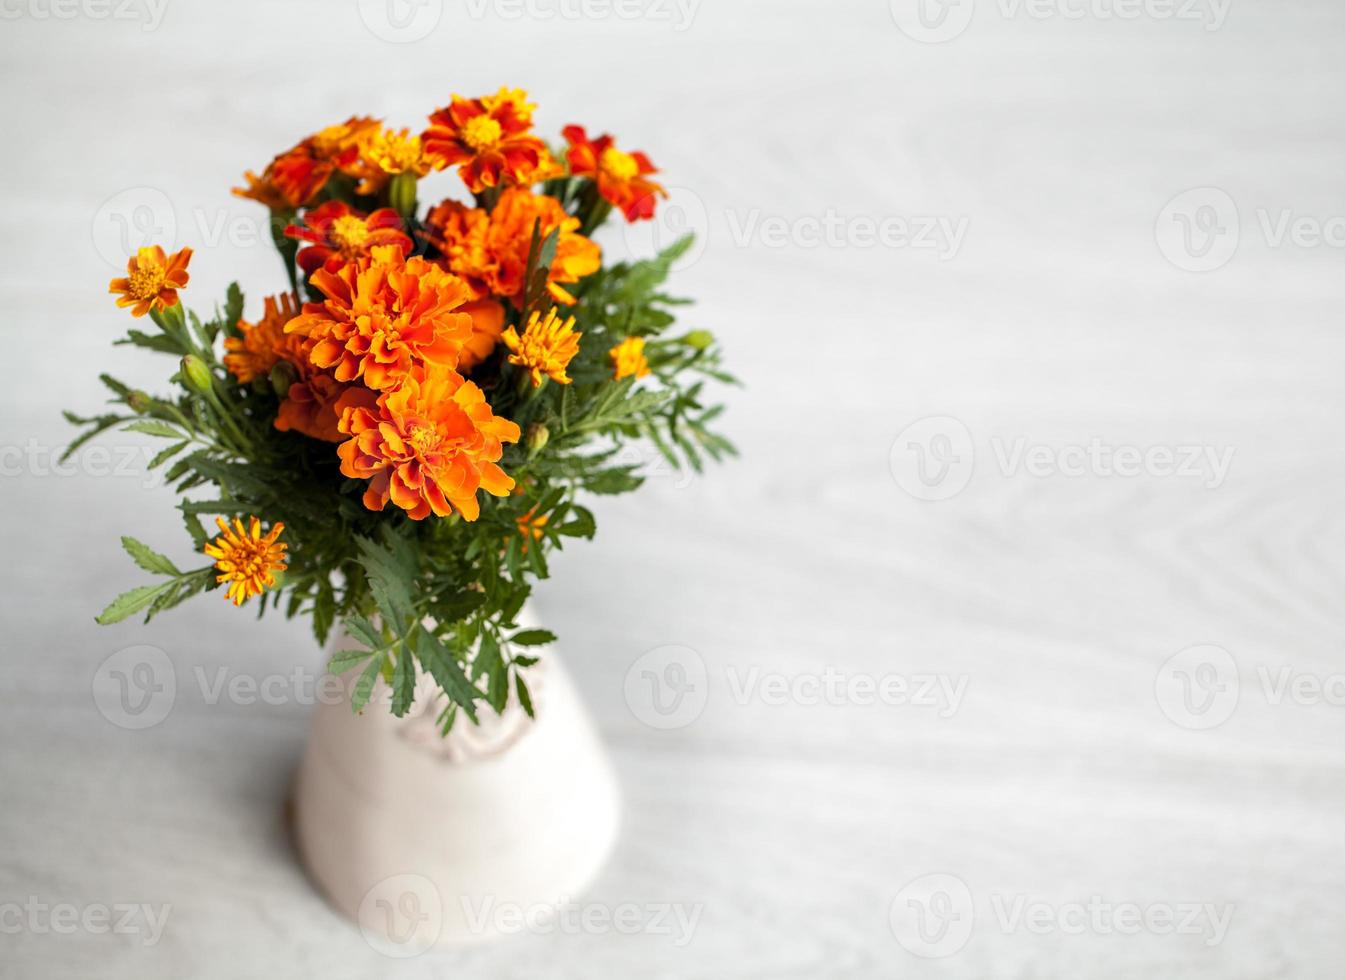 ringblommor blommor i vas på grå bakgrund foto